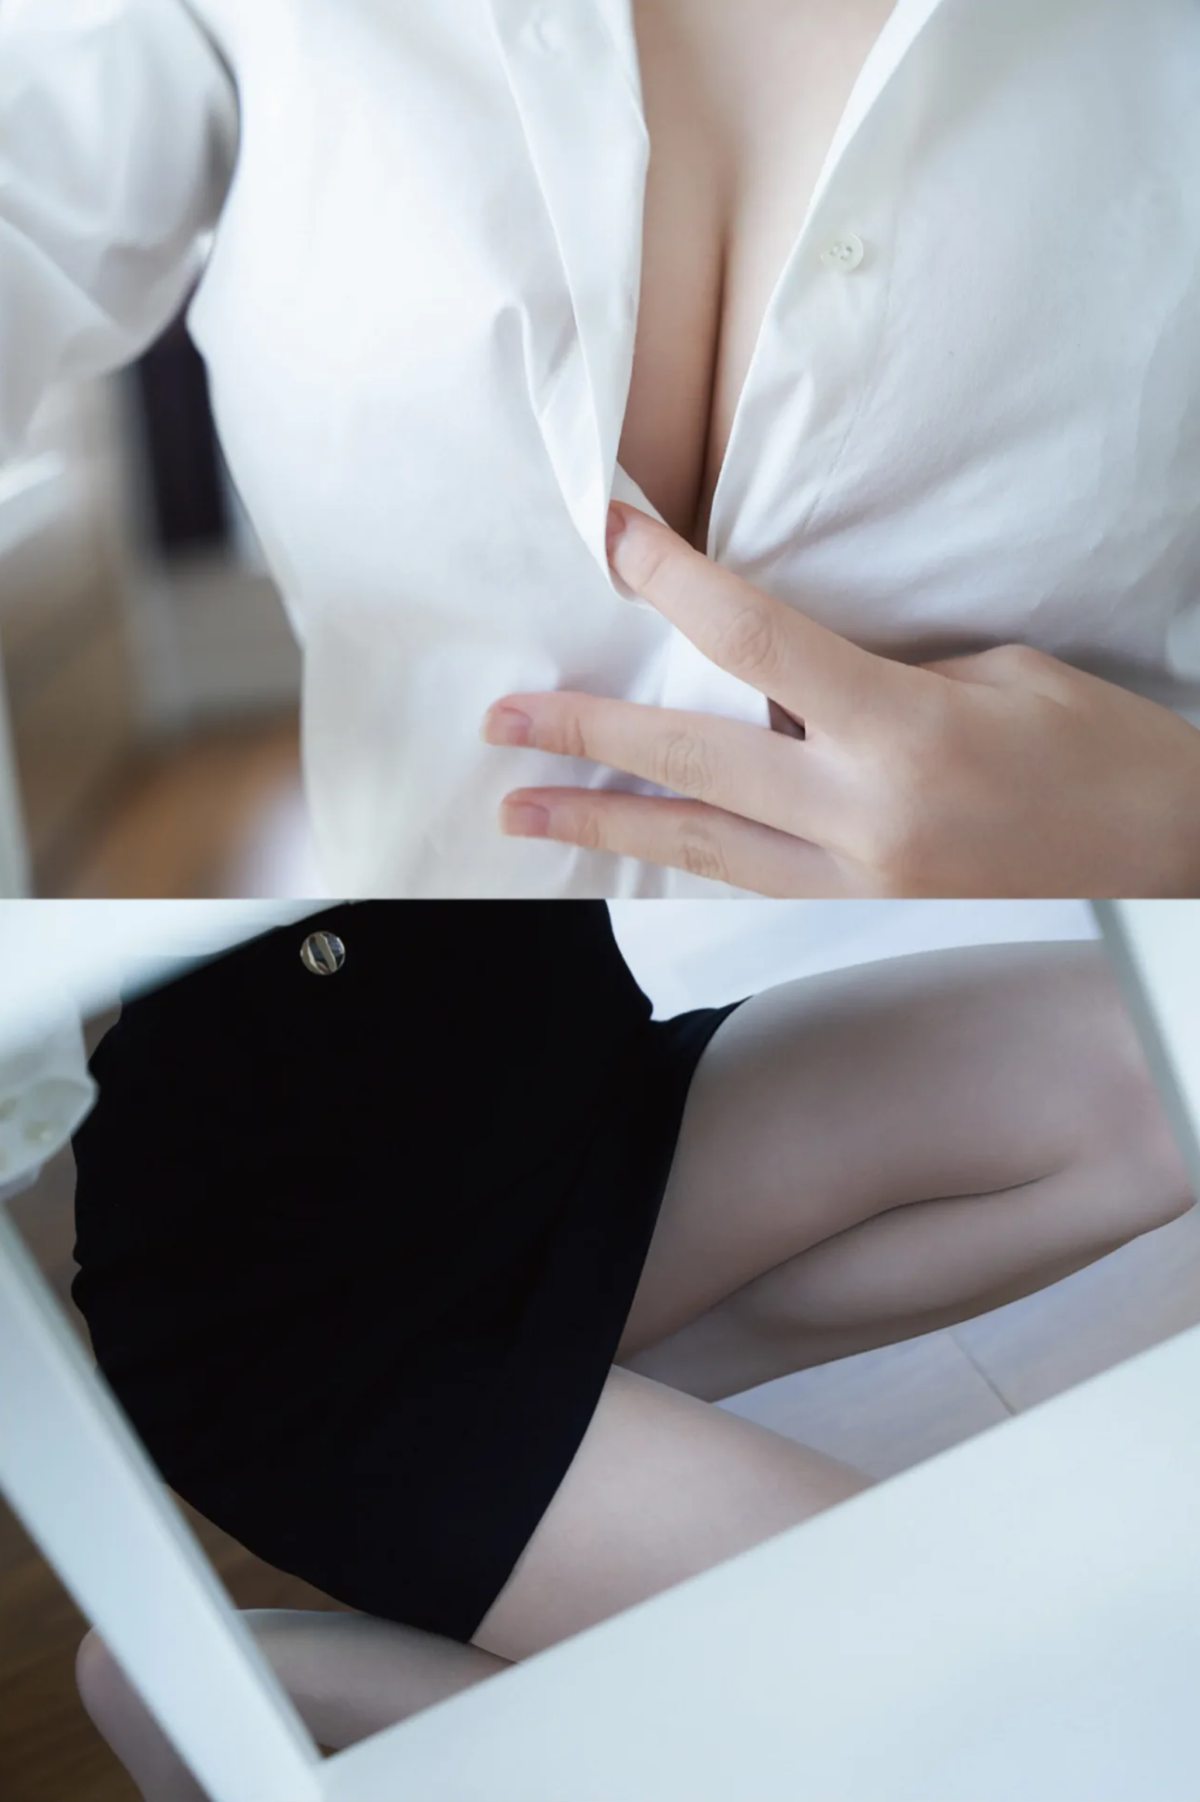 FRIDAY Digital Photobook Airi Shimizu 清水あいり Too erotic body Vol 3 エロすぎるカラダ Vol 3 2021 04 30 0004 6966939580.jpg